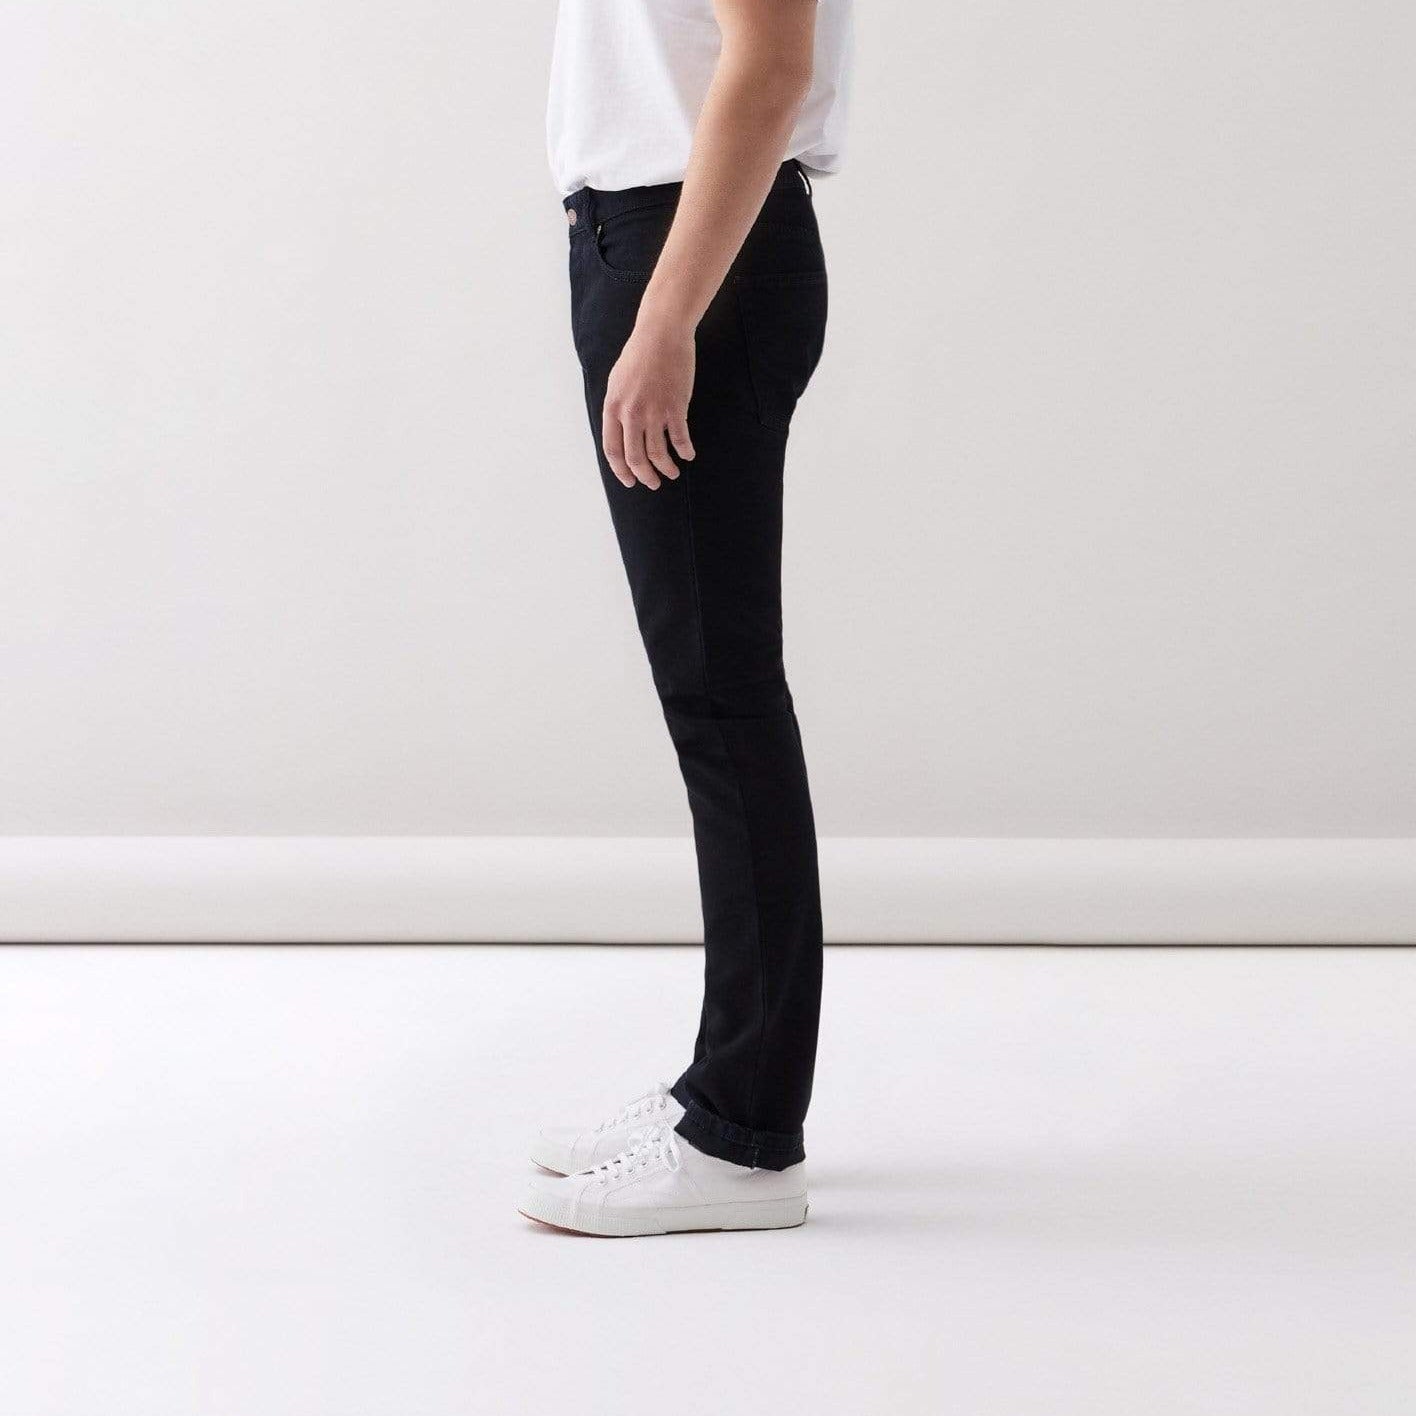 Par.co DENIM Narrow Cedar Black Narrow Jeans Jeans moda sostenible moda ètica